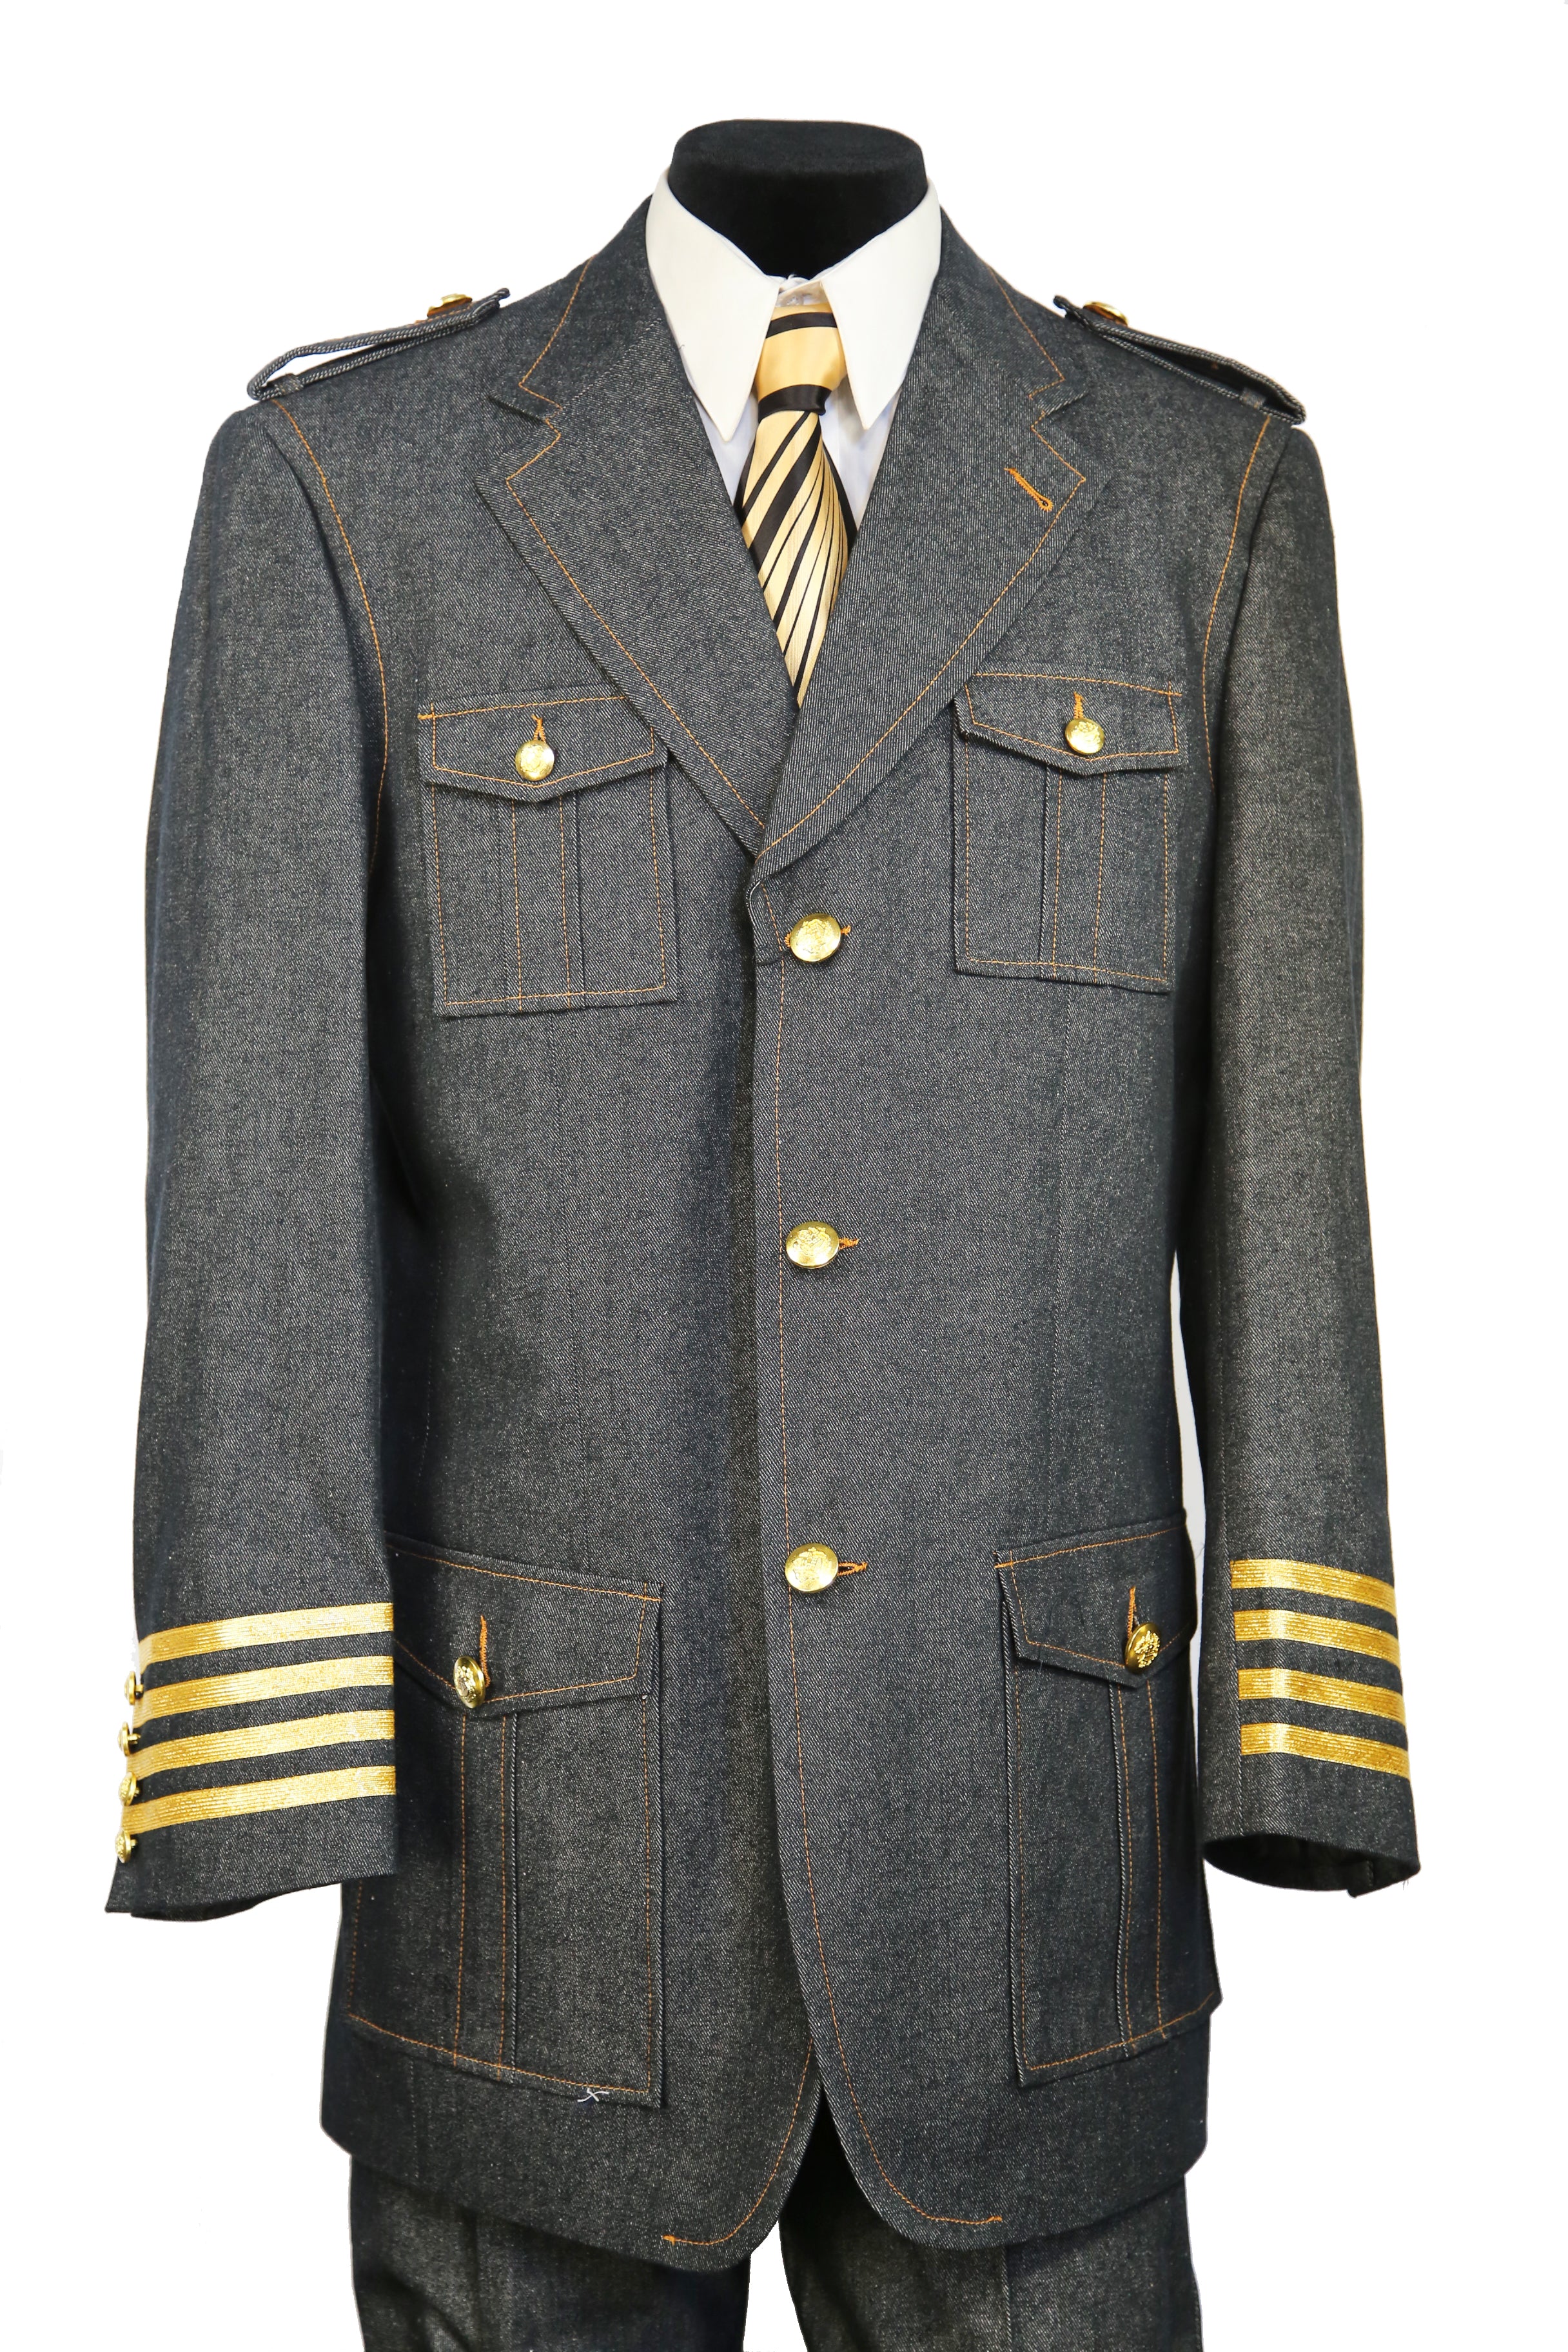 Military Style Tri-Stripe Cuff Denim  2pc  Zoot Suit Set